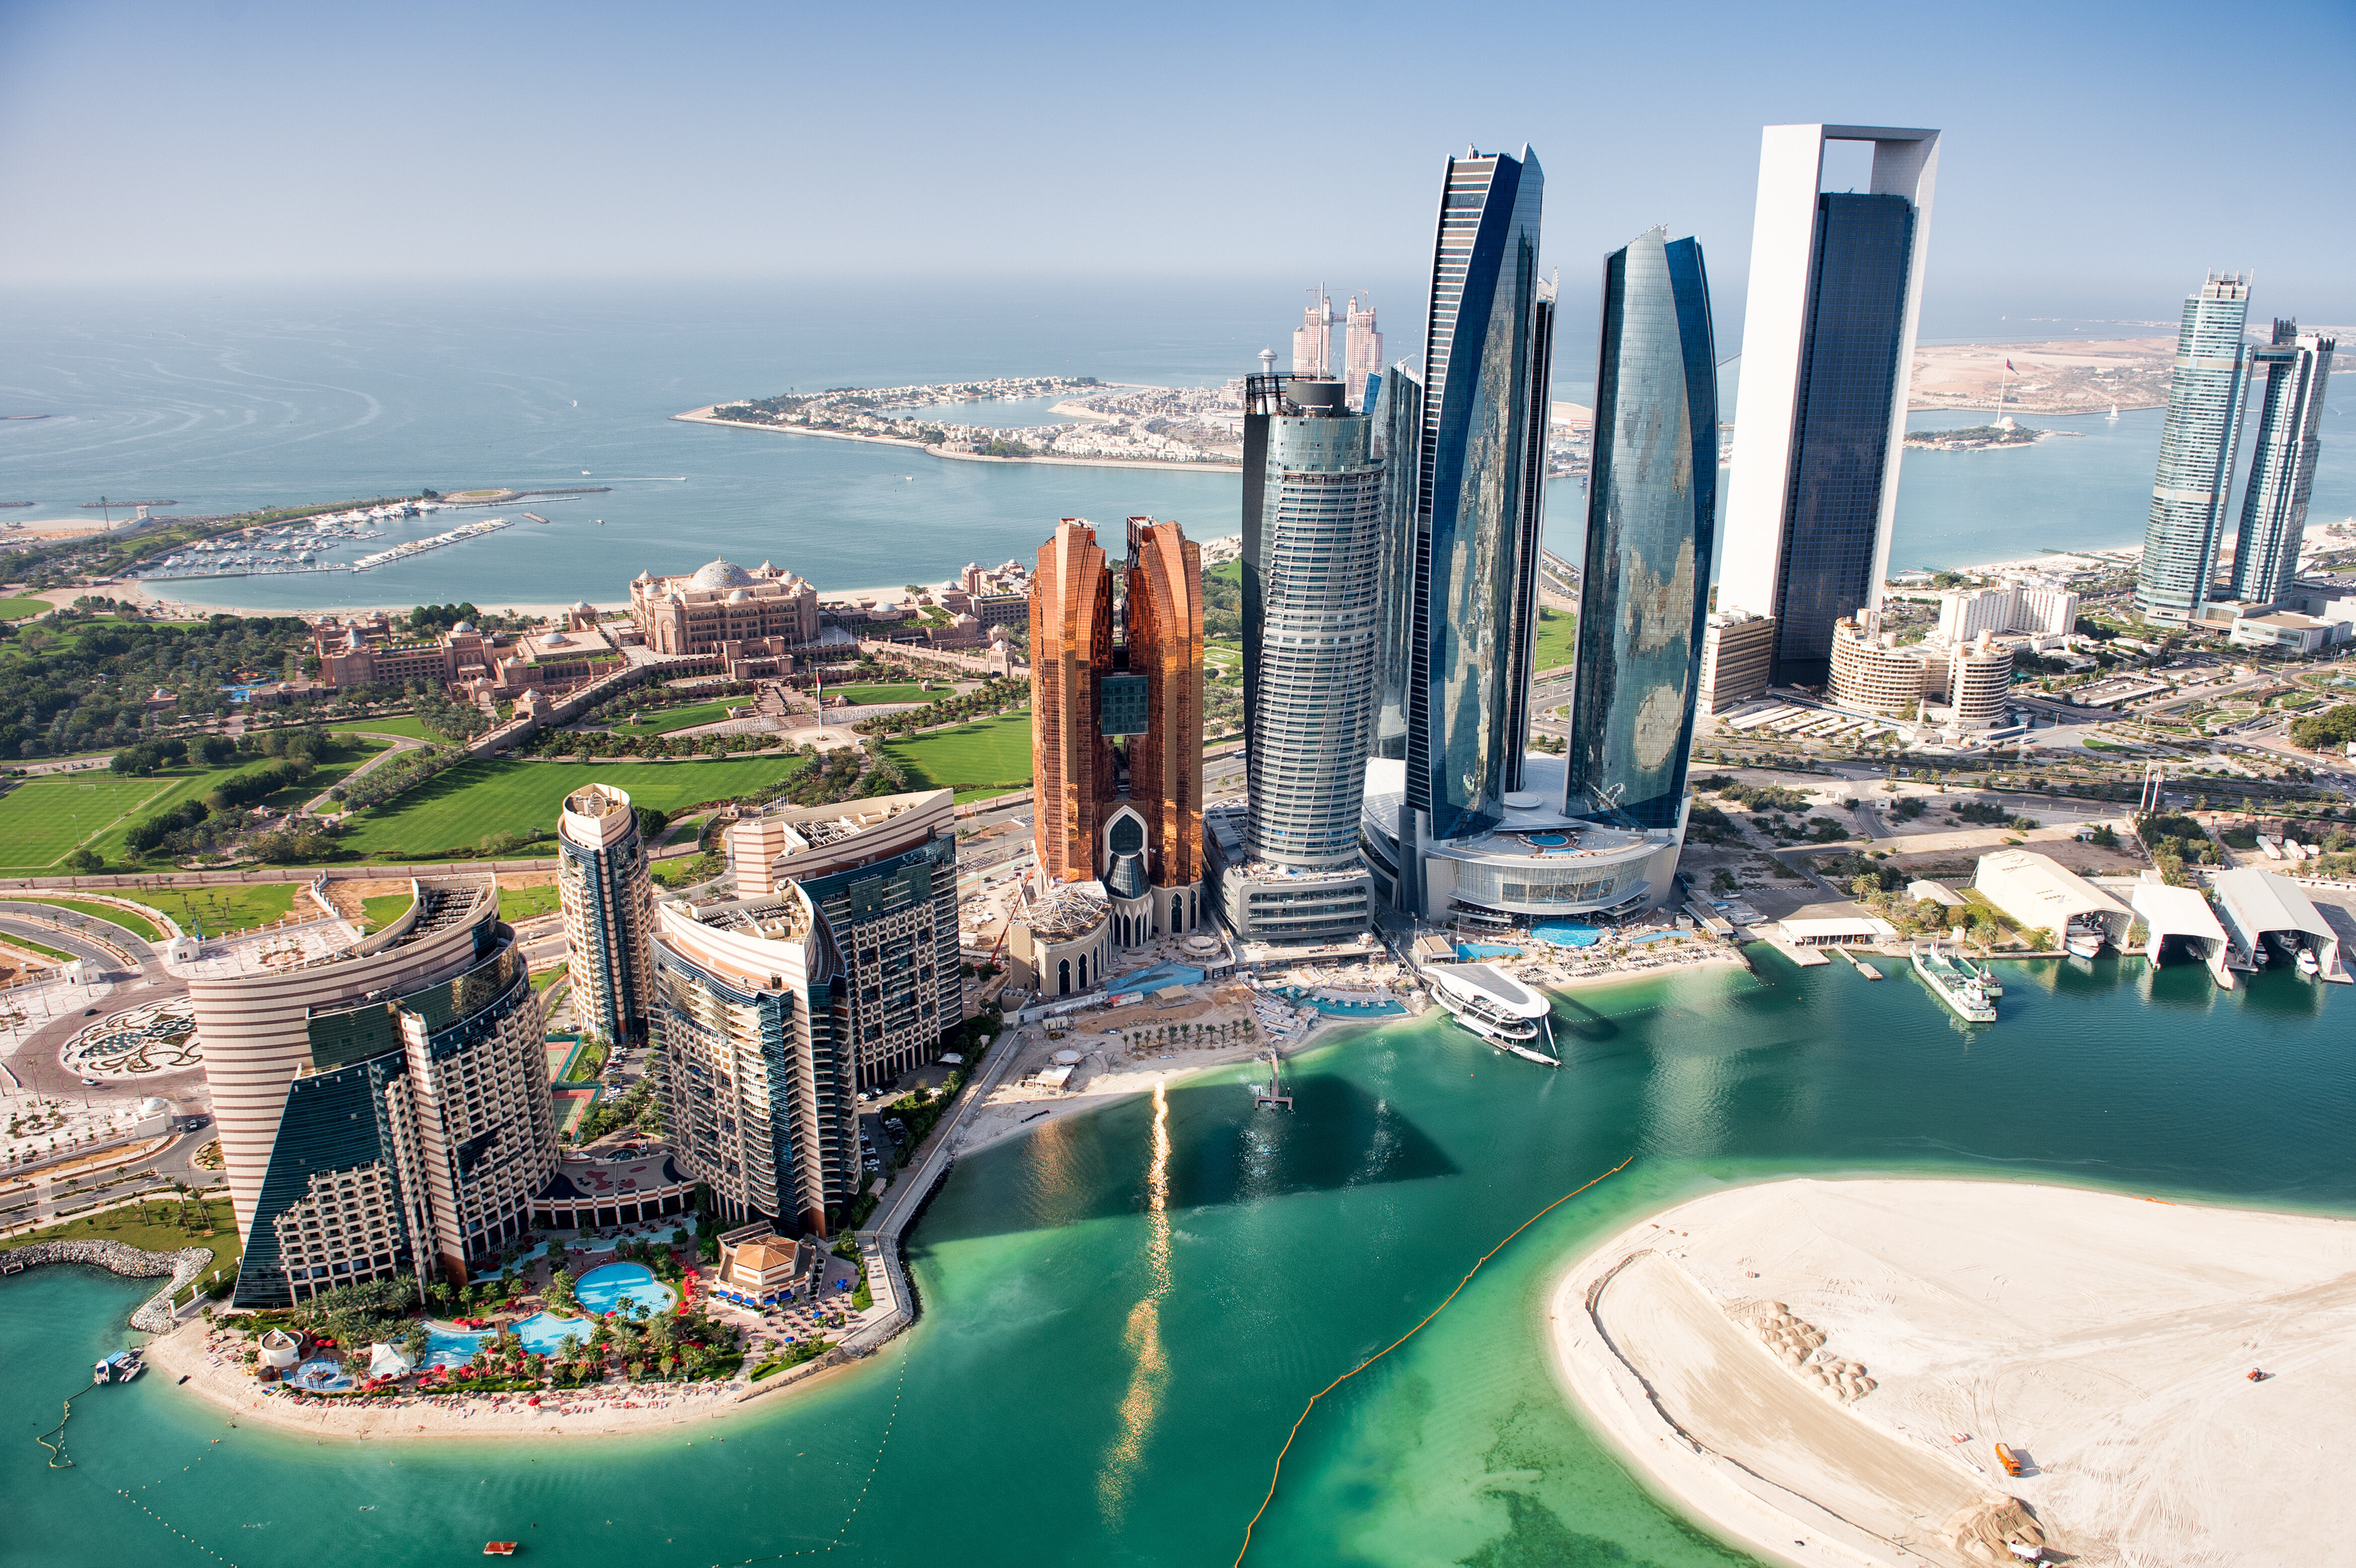 Large skyscrapers found in Dubai